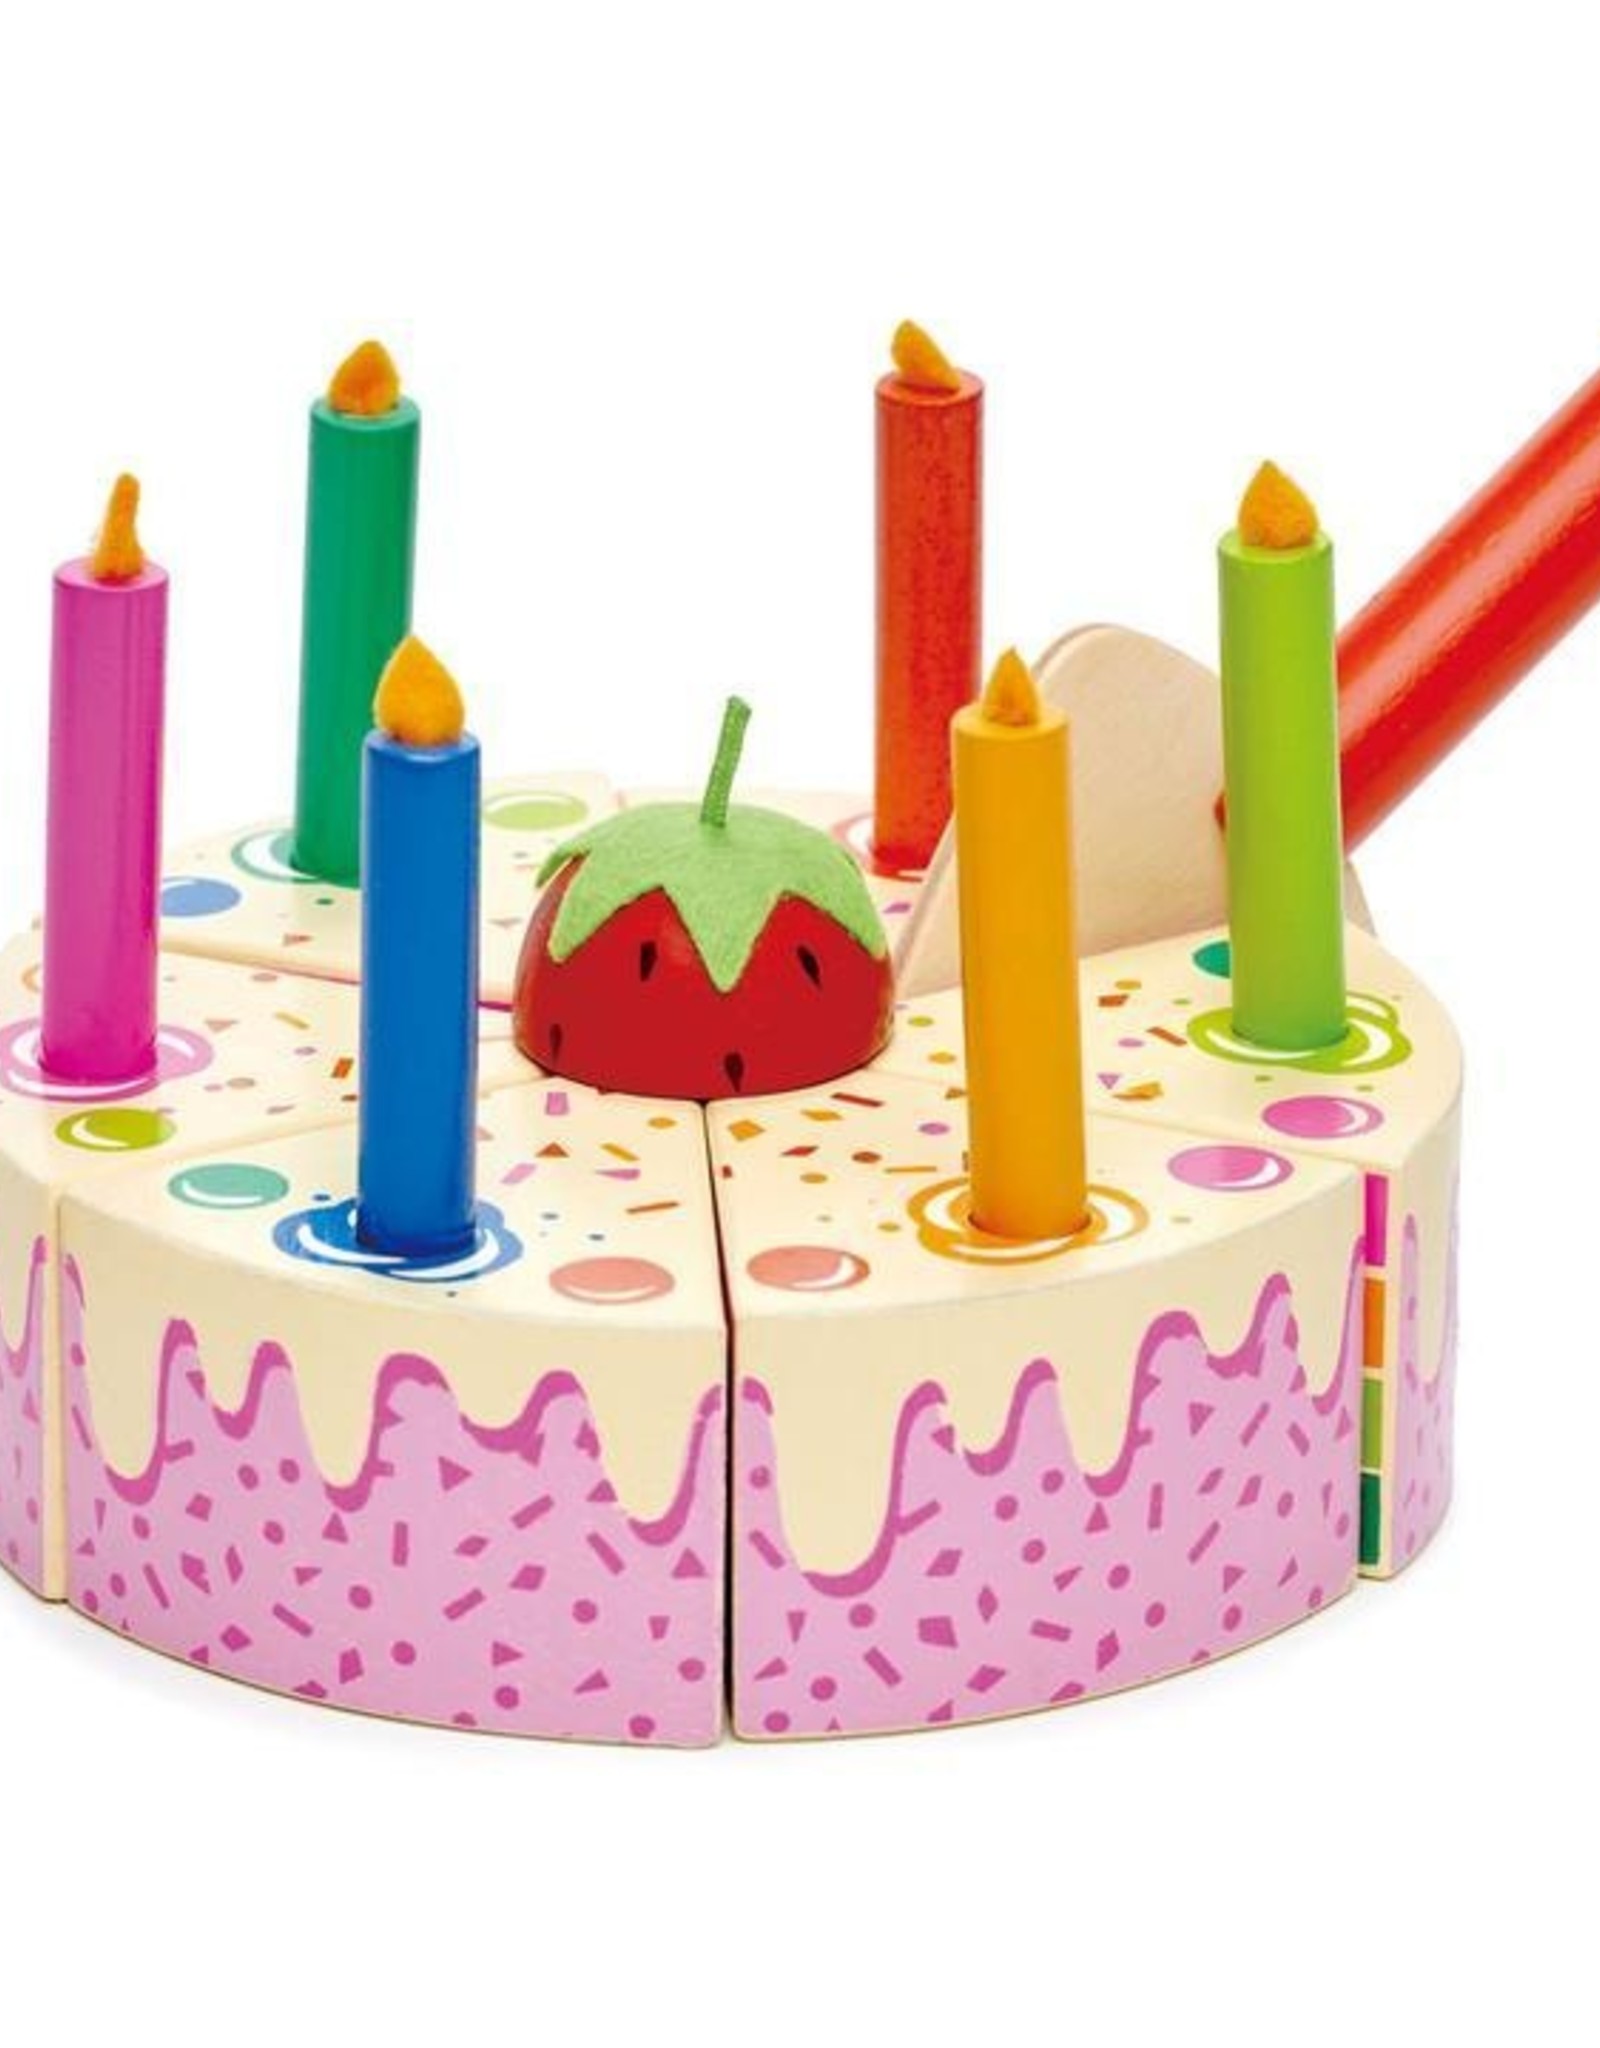 Tender leaf toys Rainbow Birthday Cake